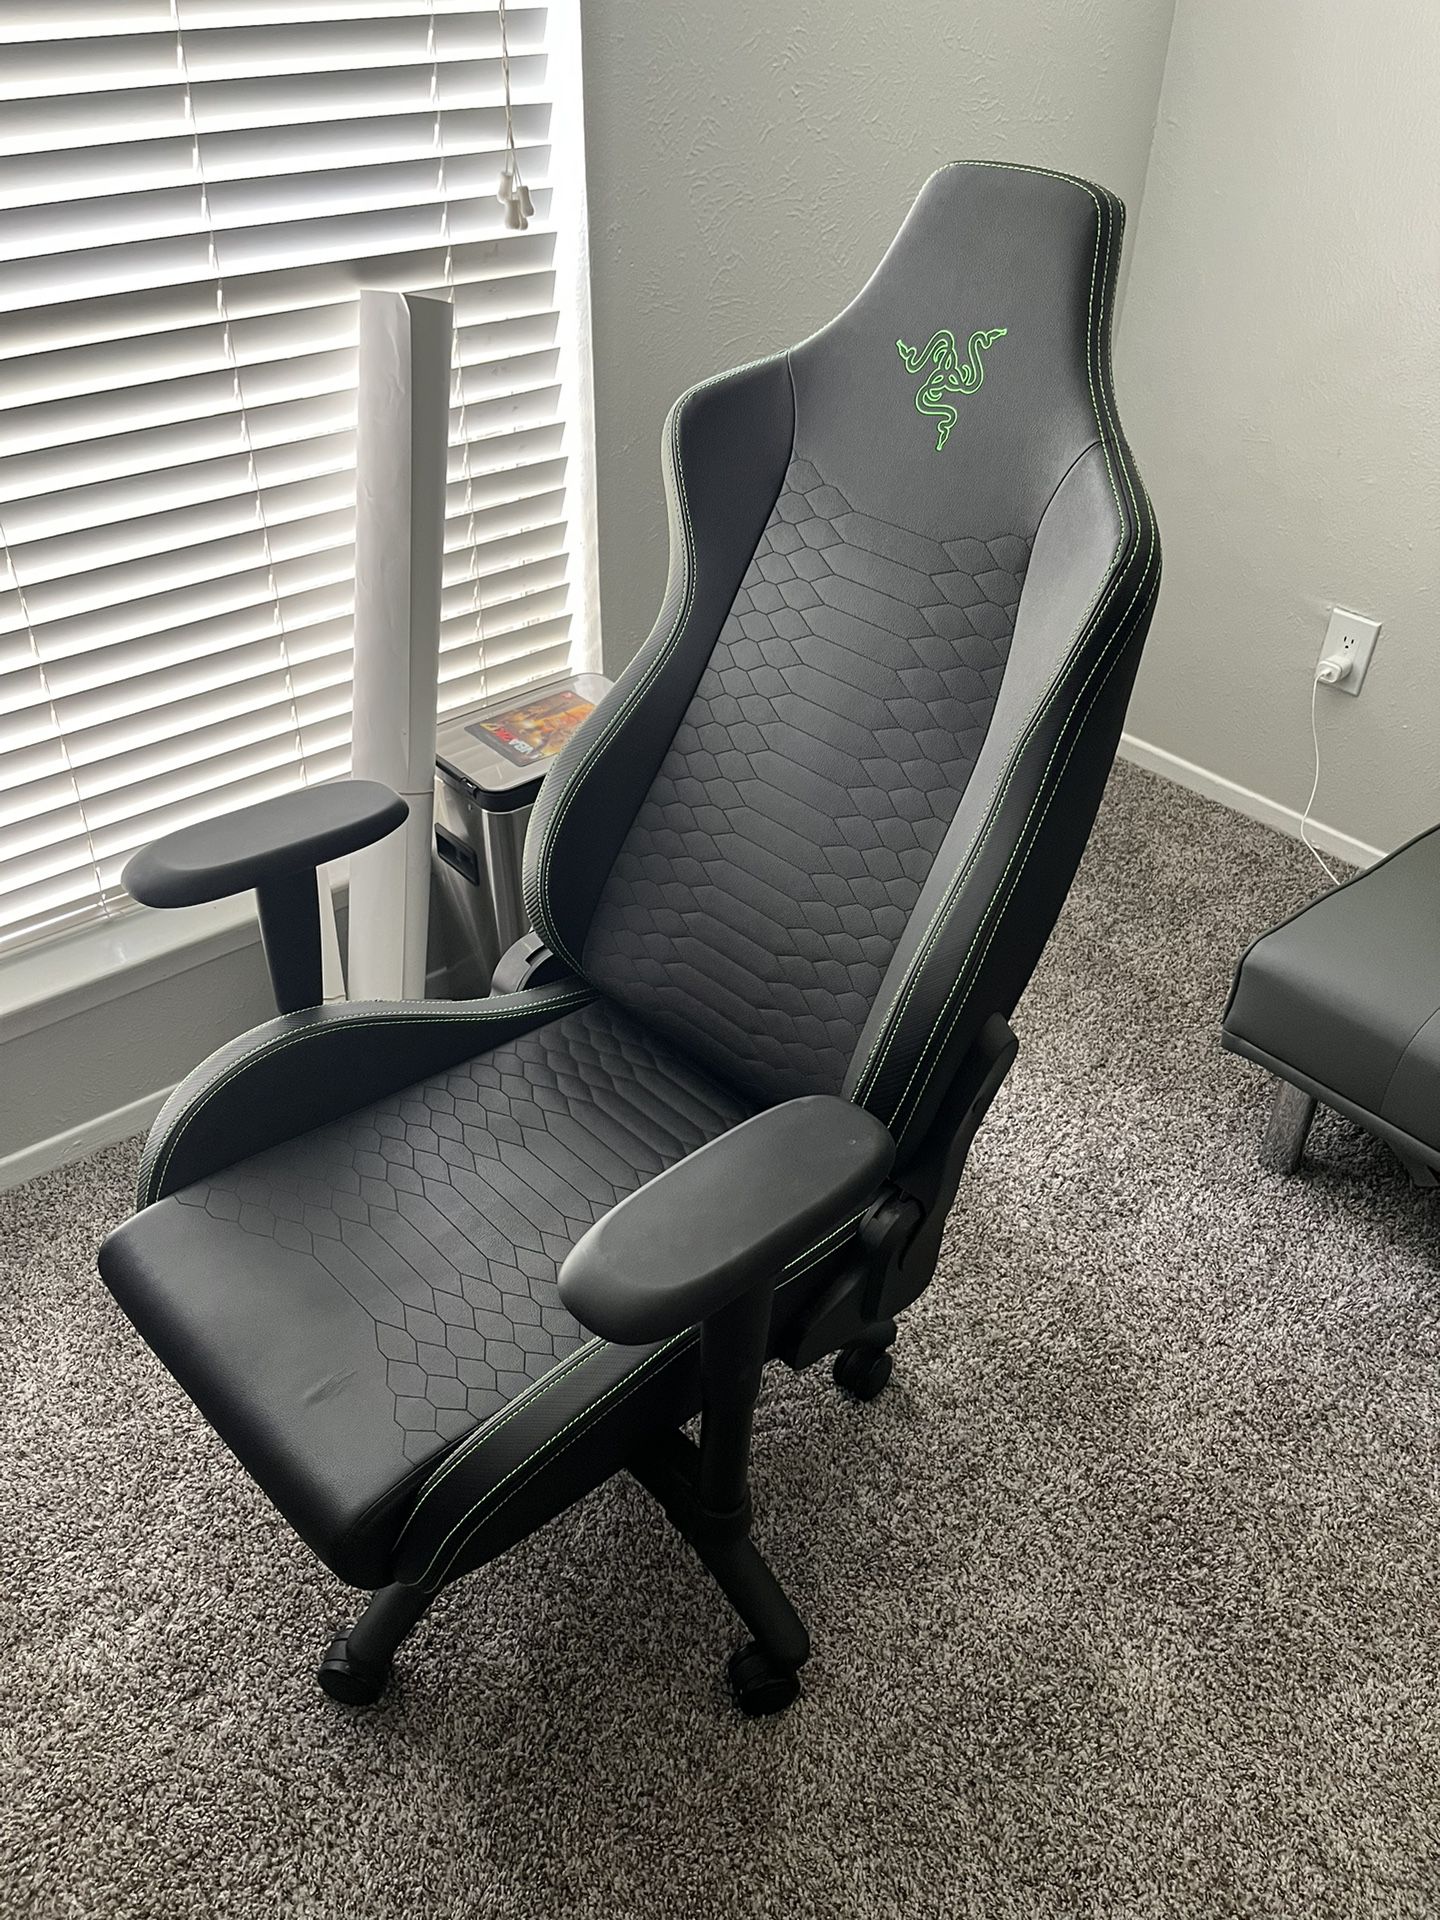 Razer Game Chair 